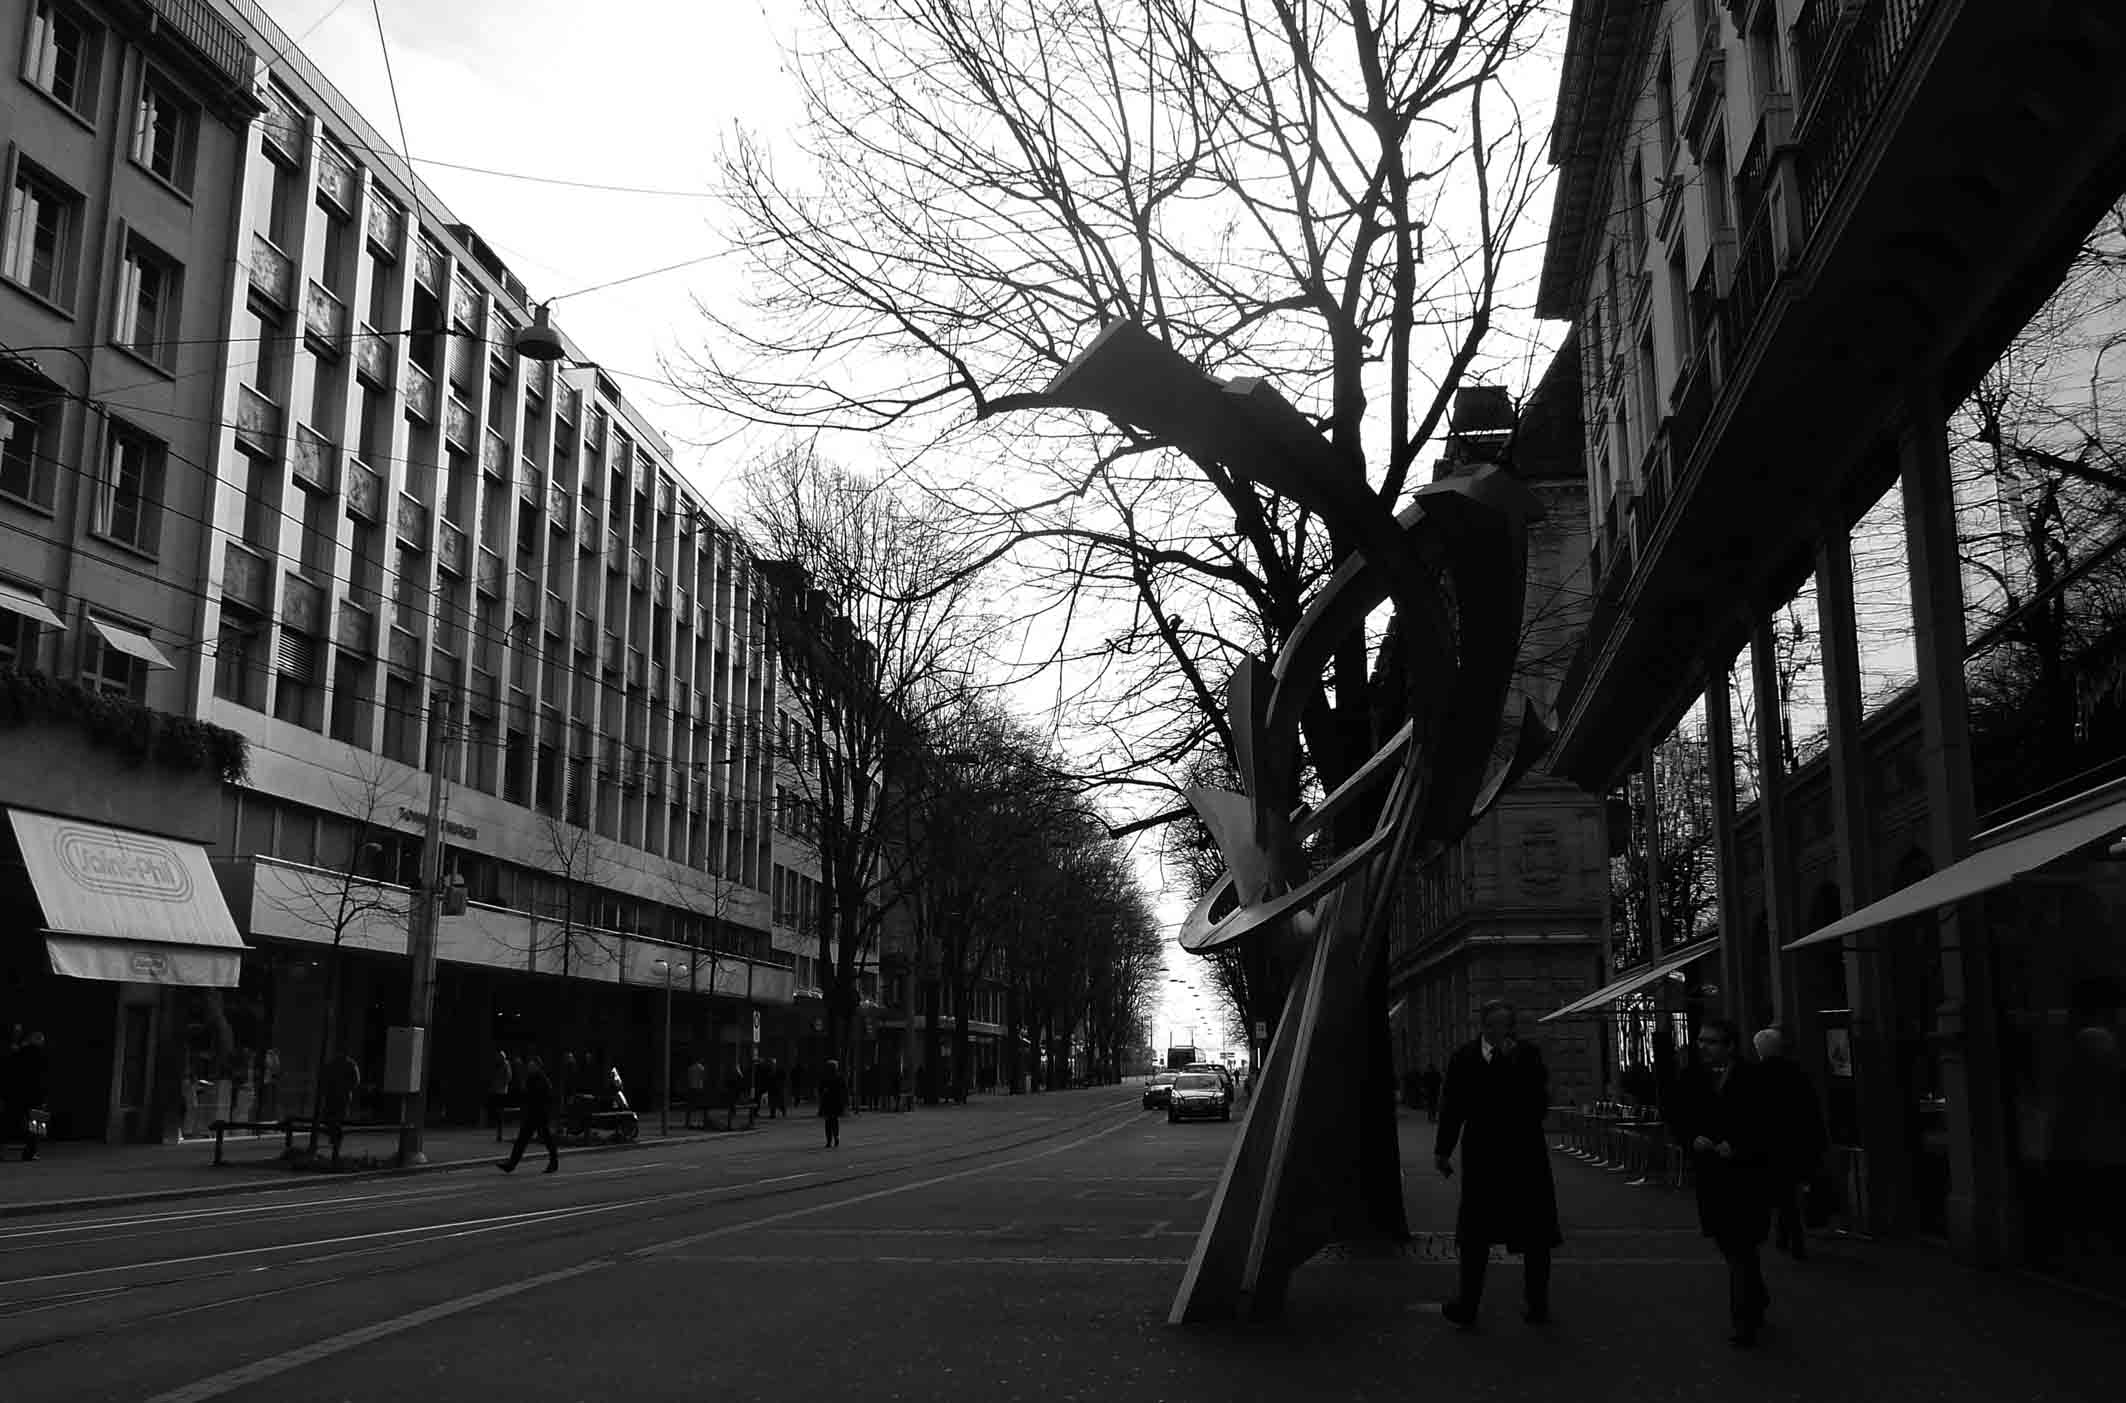 Black and white street